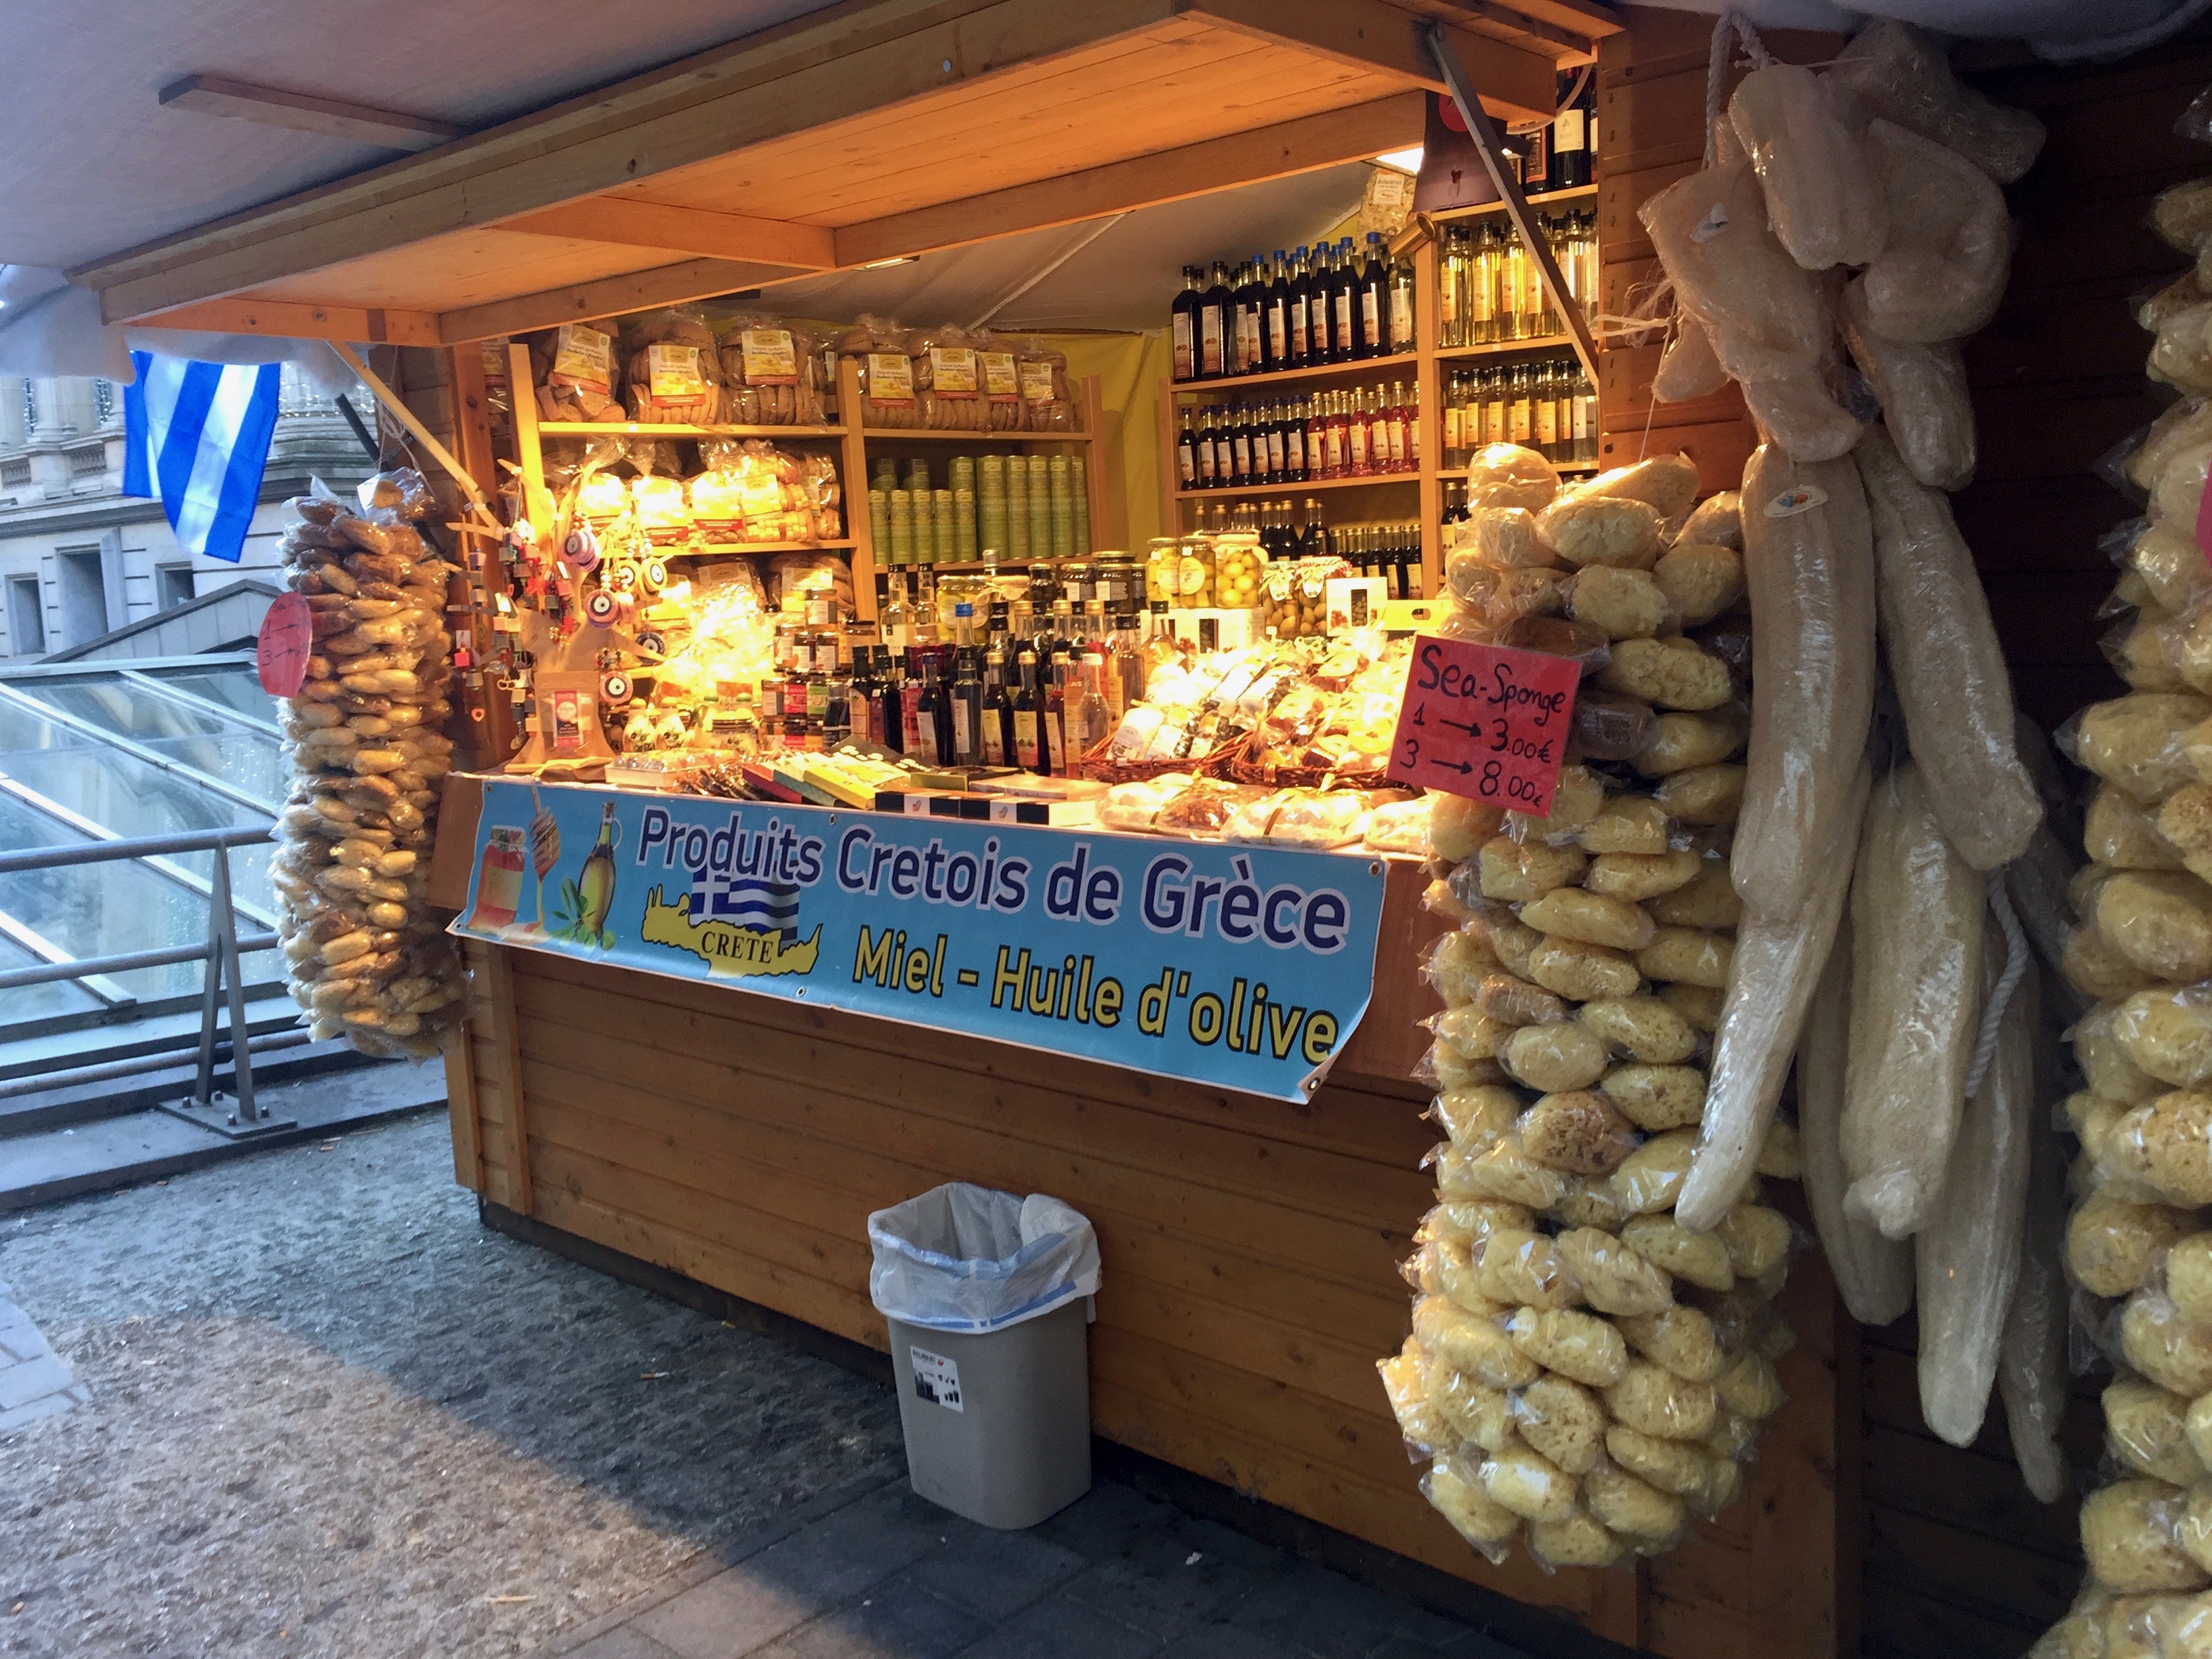 Brussels Christmas Market Crete Specialties